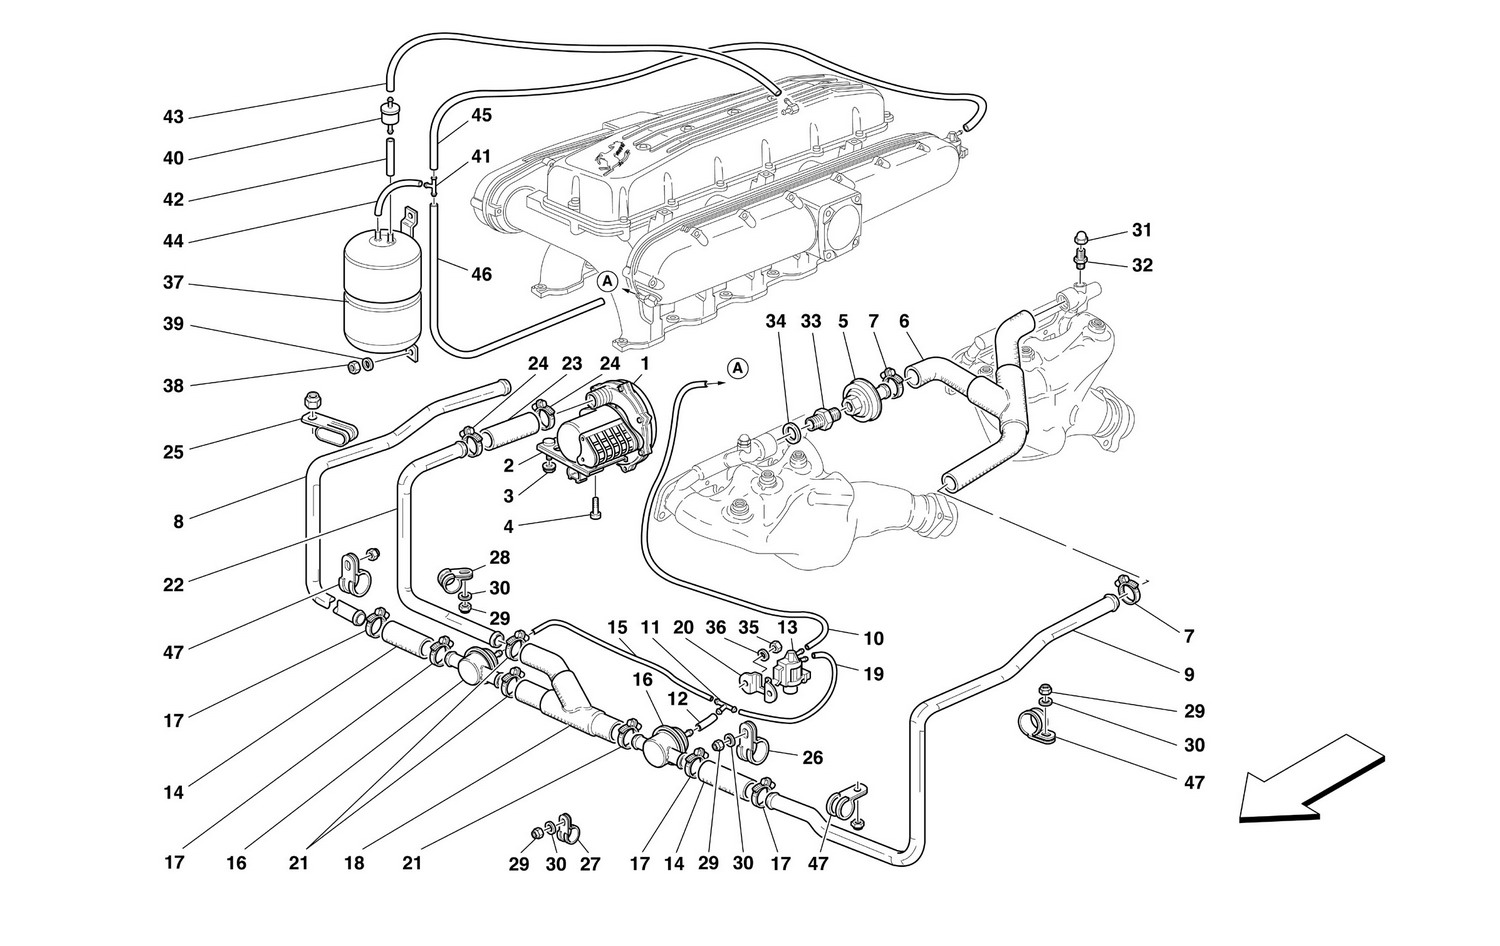 Schematic: Secondary Air Pump